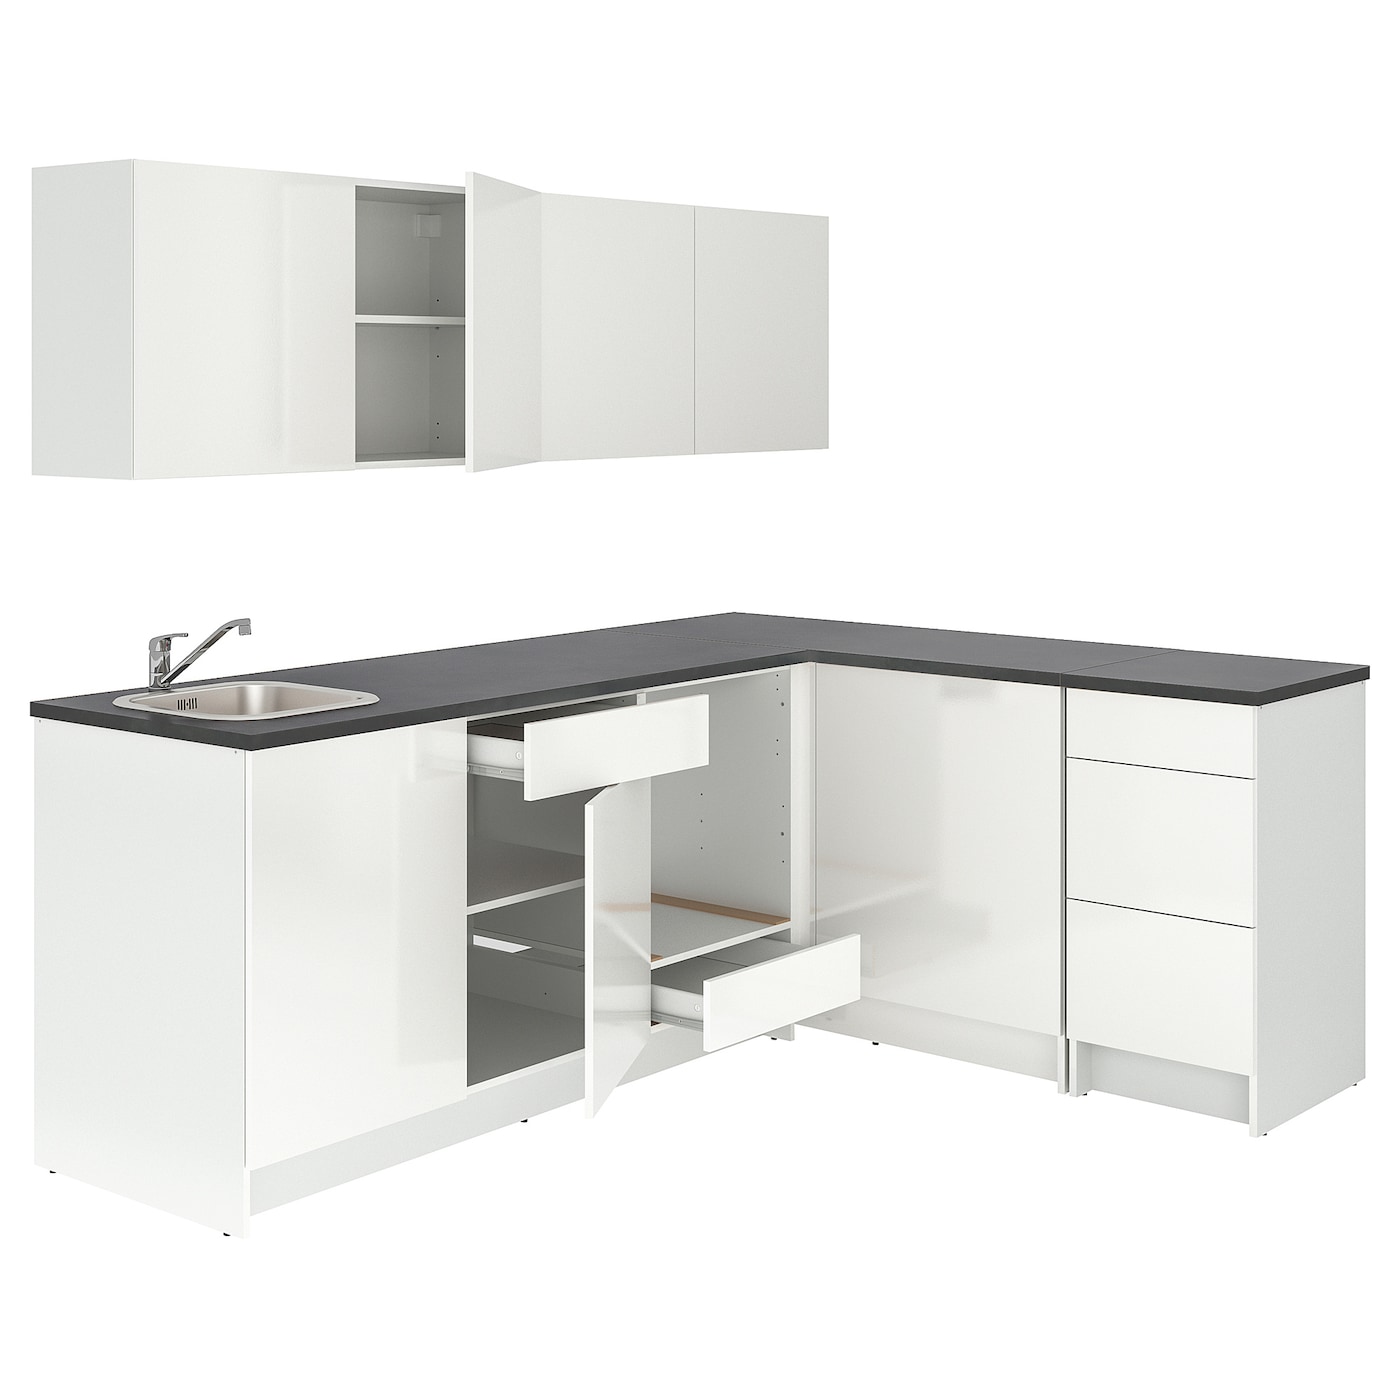 Угловая кухня -  KNOXHULT IKEA/ КНОКСХУЛЬТ ИКЕА, 243х220 см, белый/серый